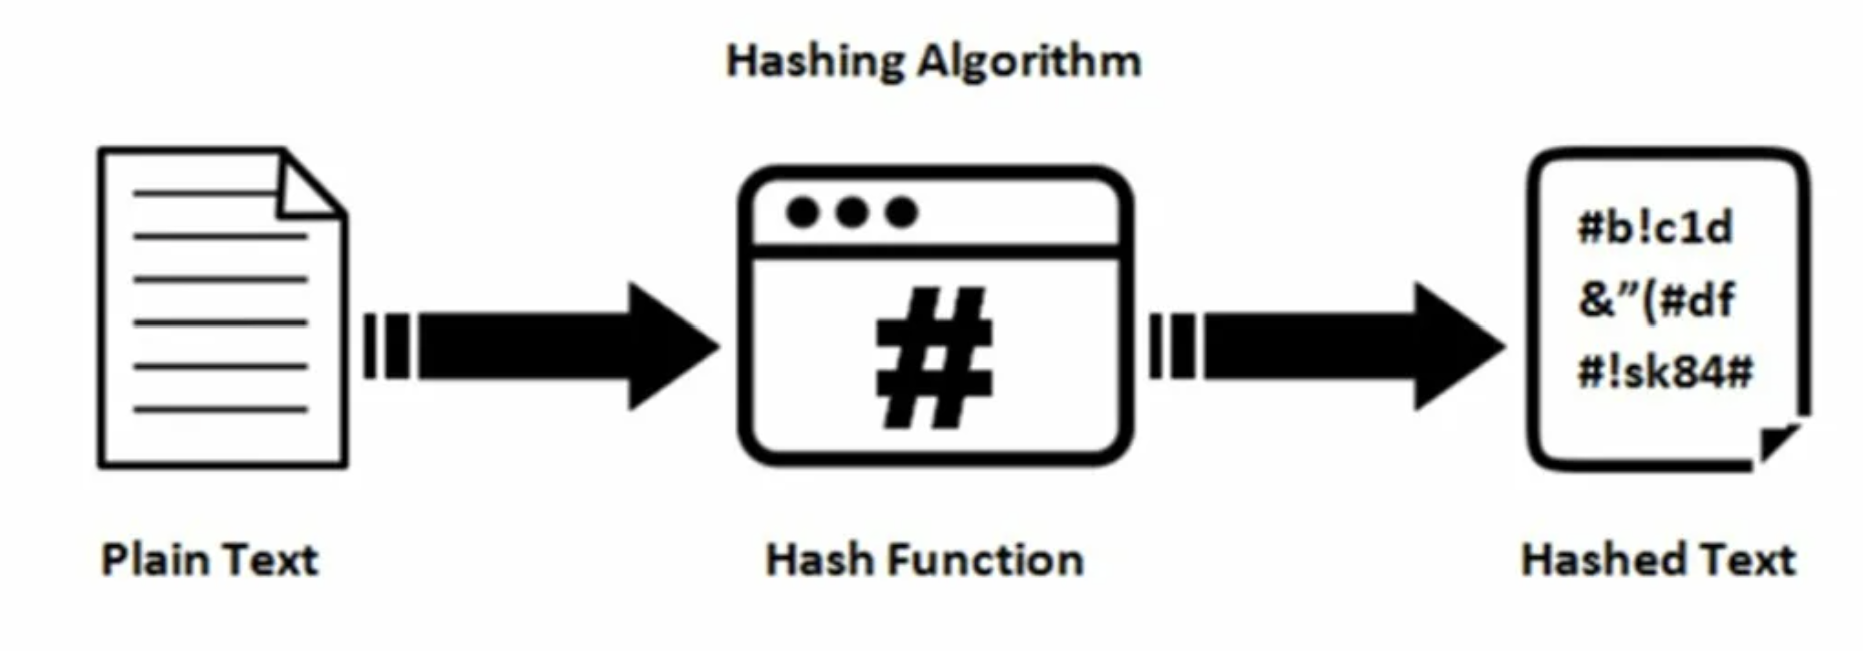 SHA - Secure Hash Algorithm - алгоритм криптографического хеширования - SHA-1 и SHA-2